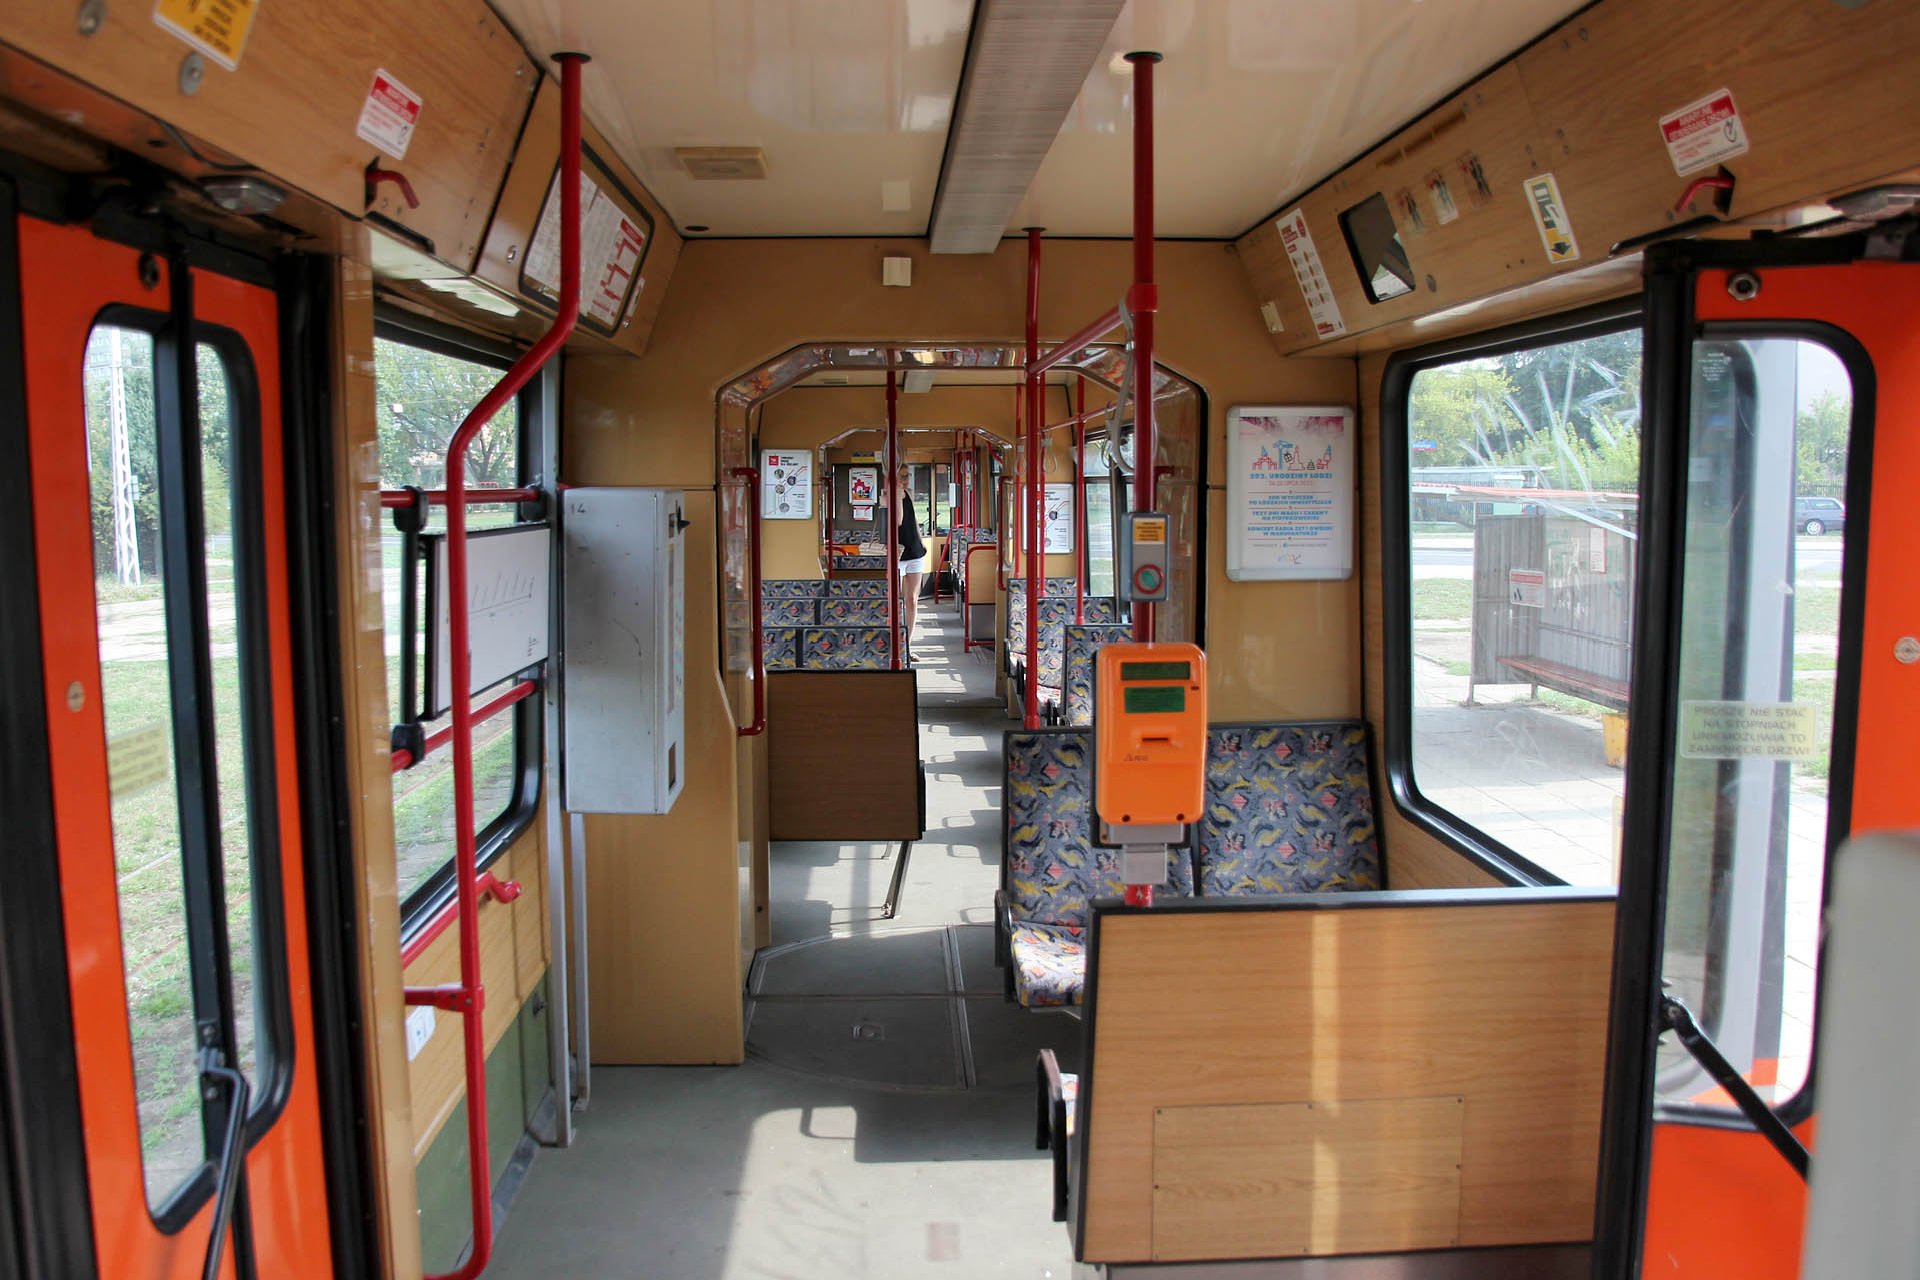 M8C 531 ex Bielefeld Nun ein Blick ins Innere. Now a look into the tram.